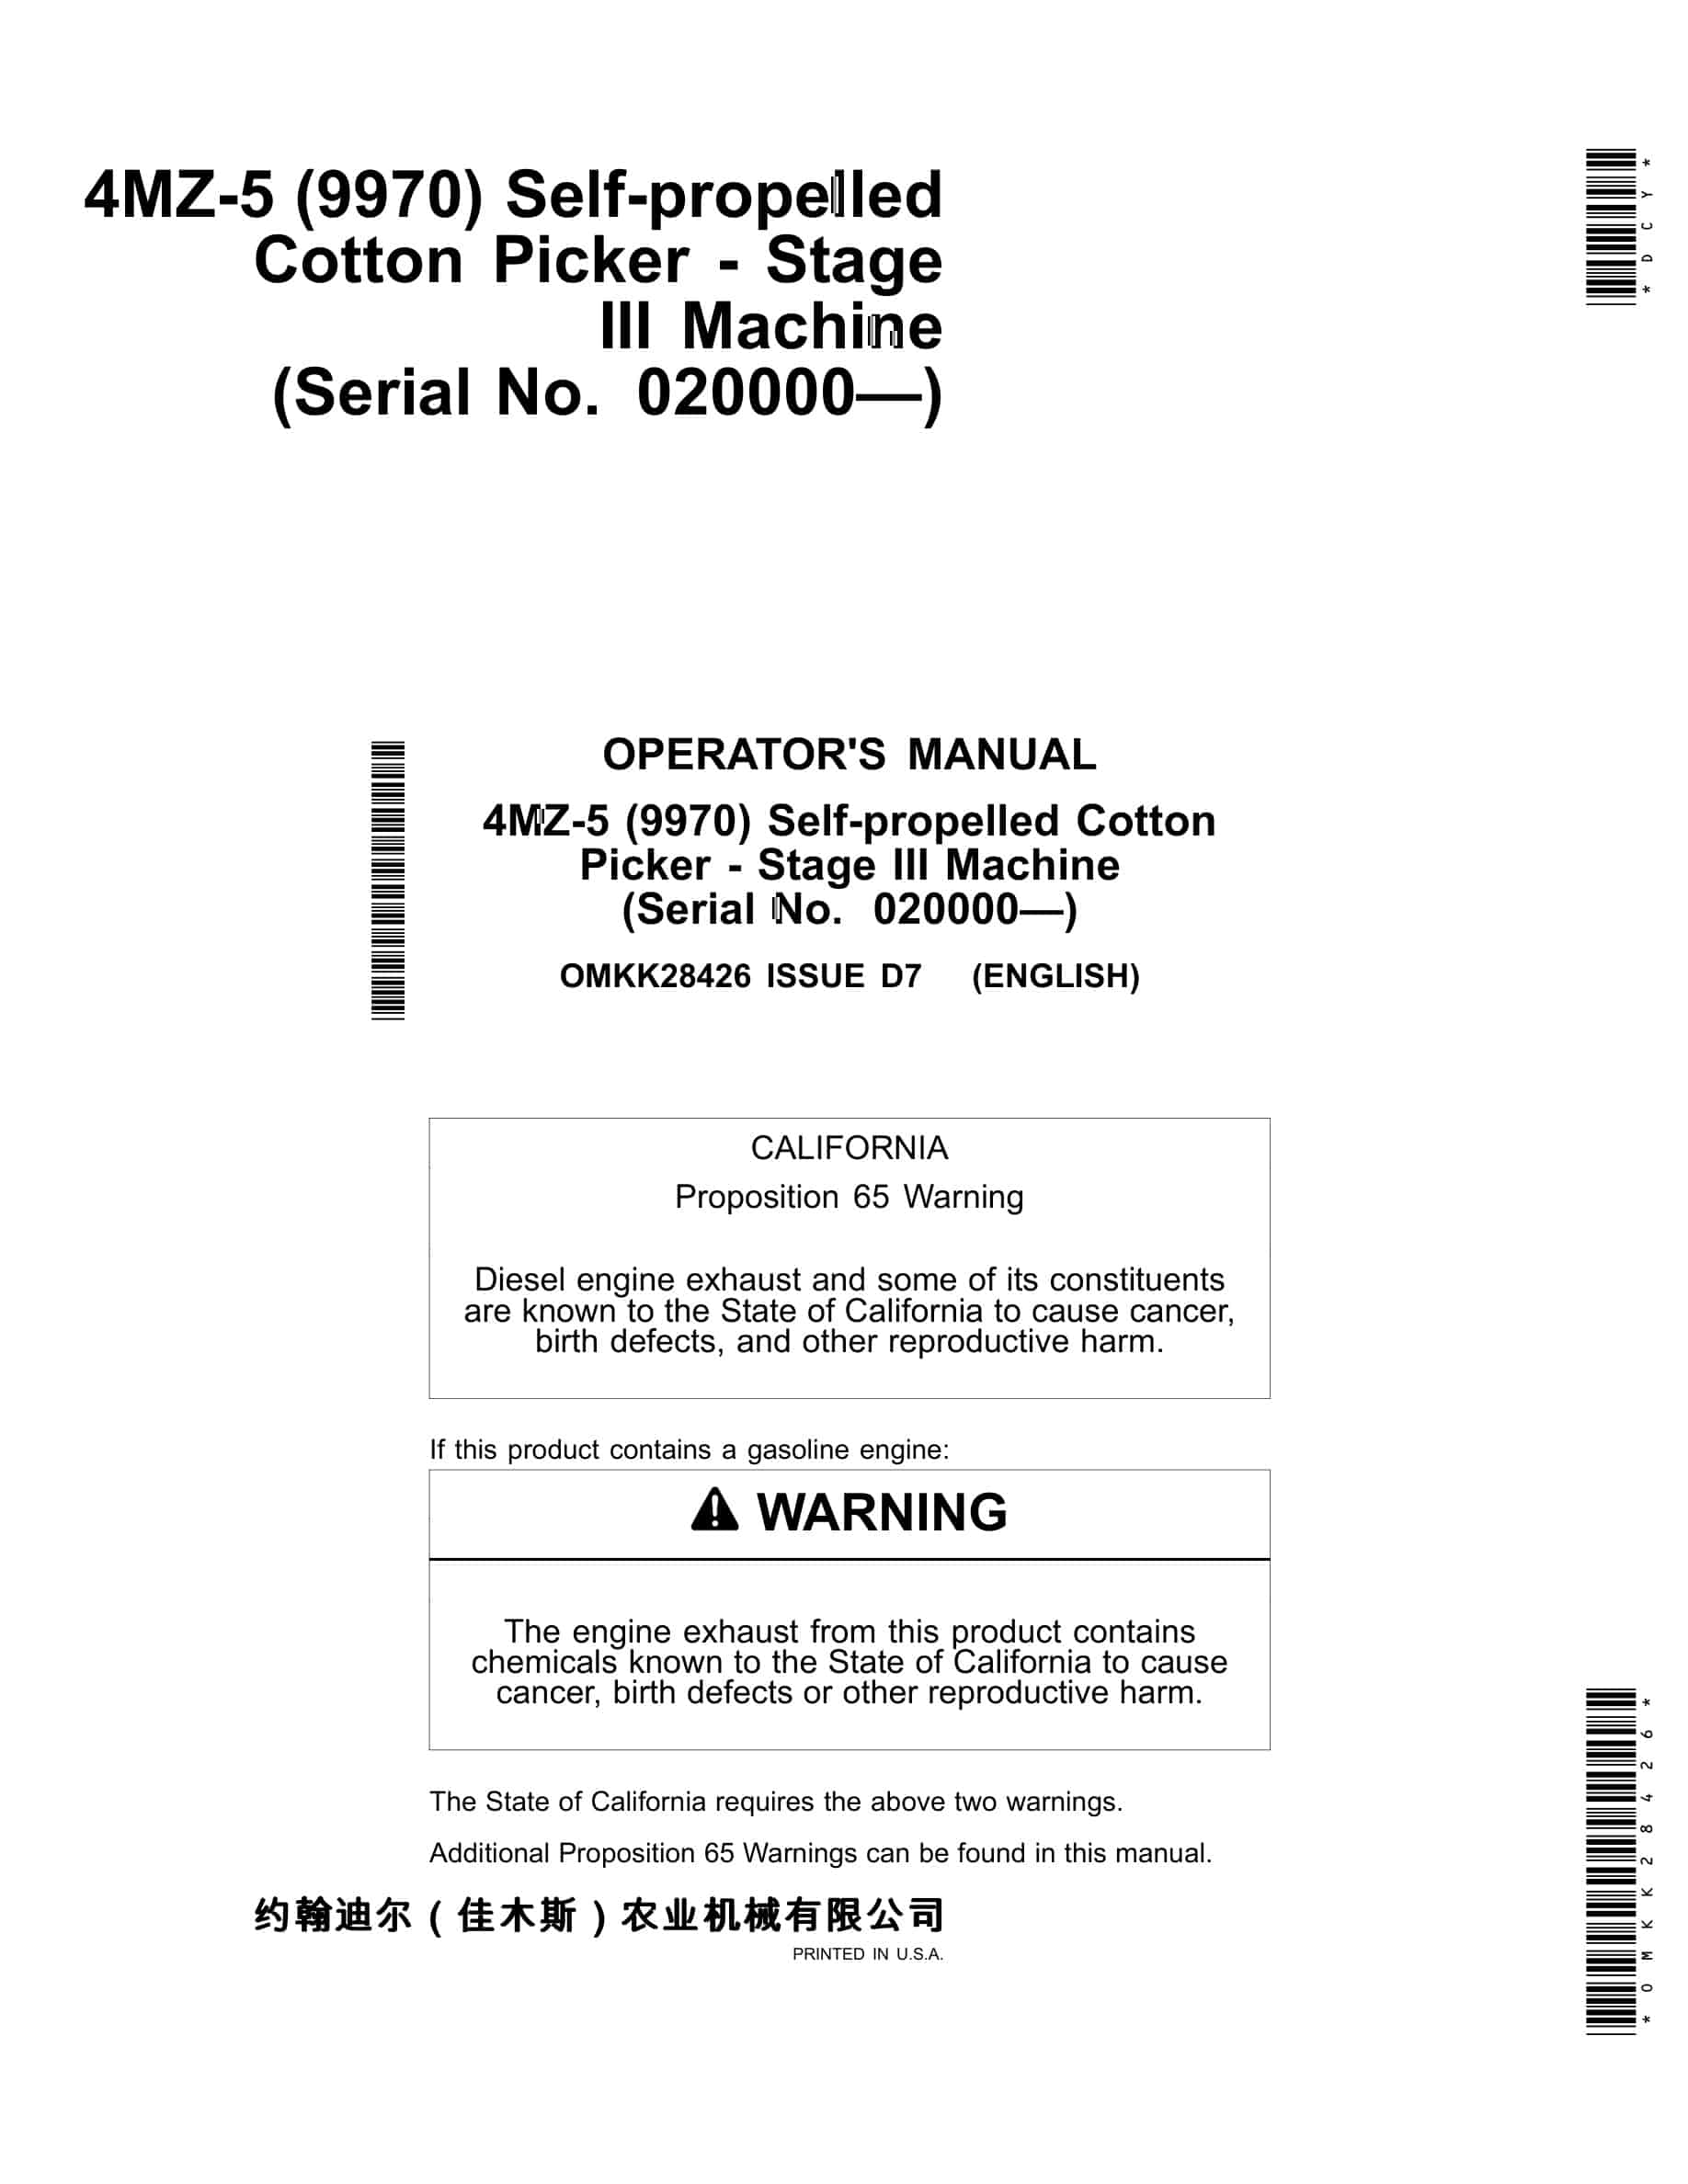 John Deere 4MZ-5 (9970) Self-propelled Cotton Picker Stage III Machine Operator Manual OMKK28426-1